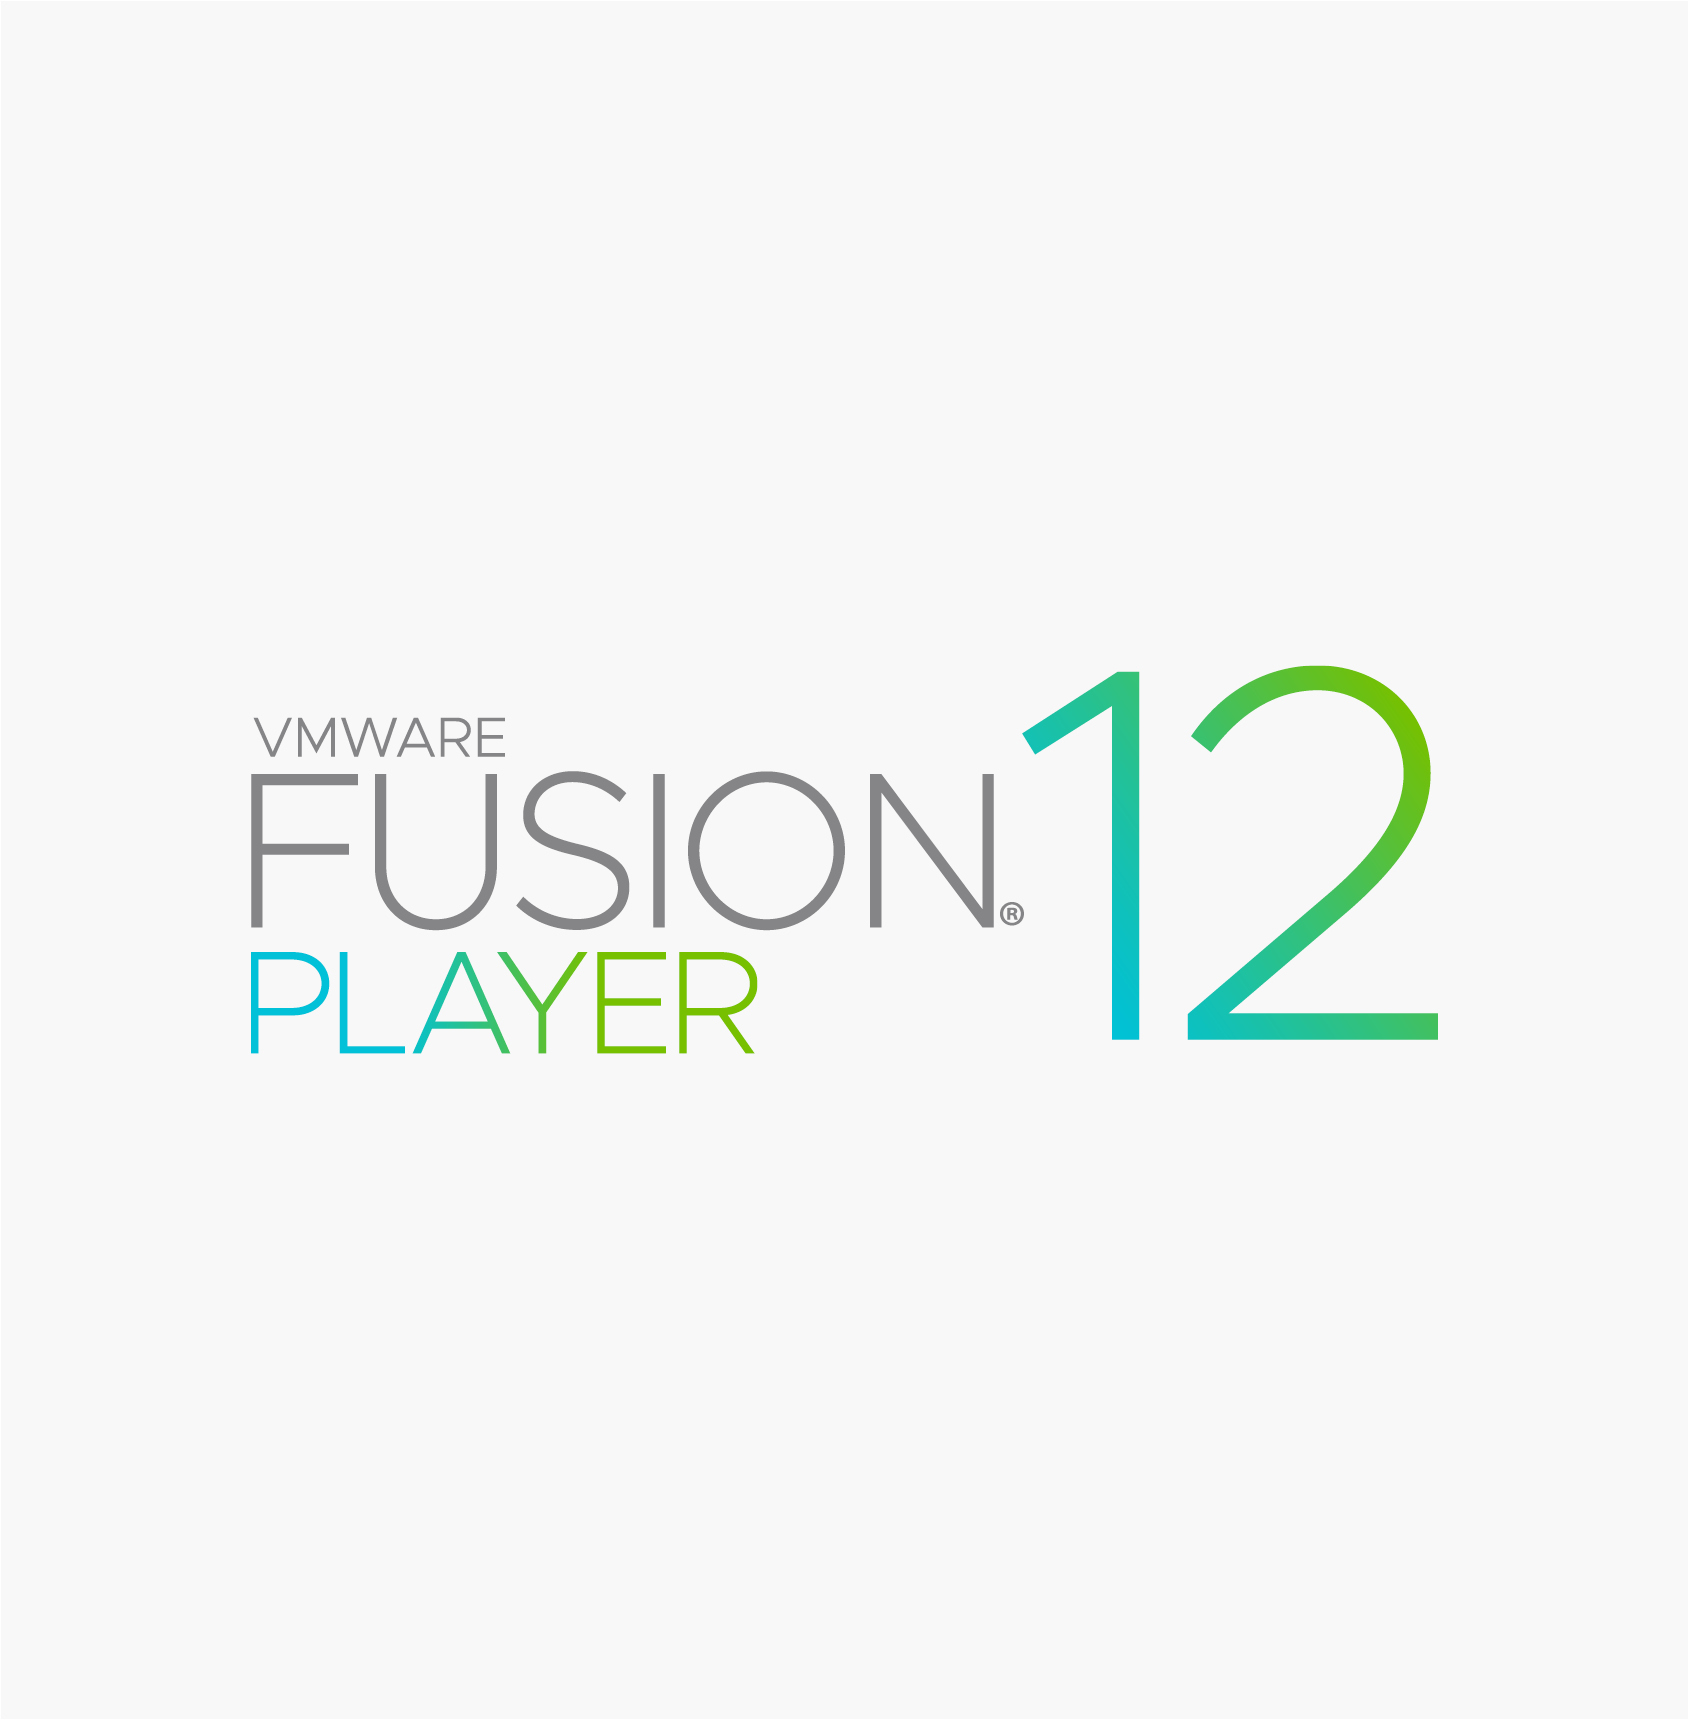 vmware fusion player 12 free